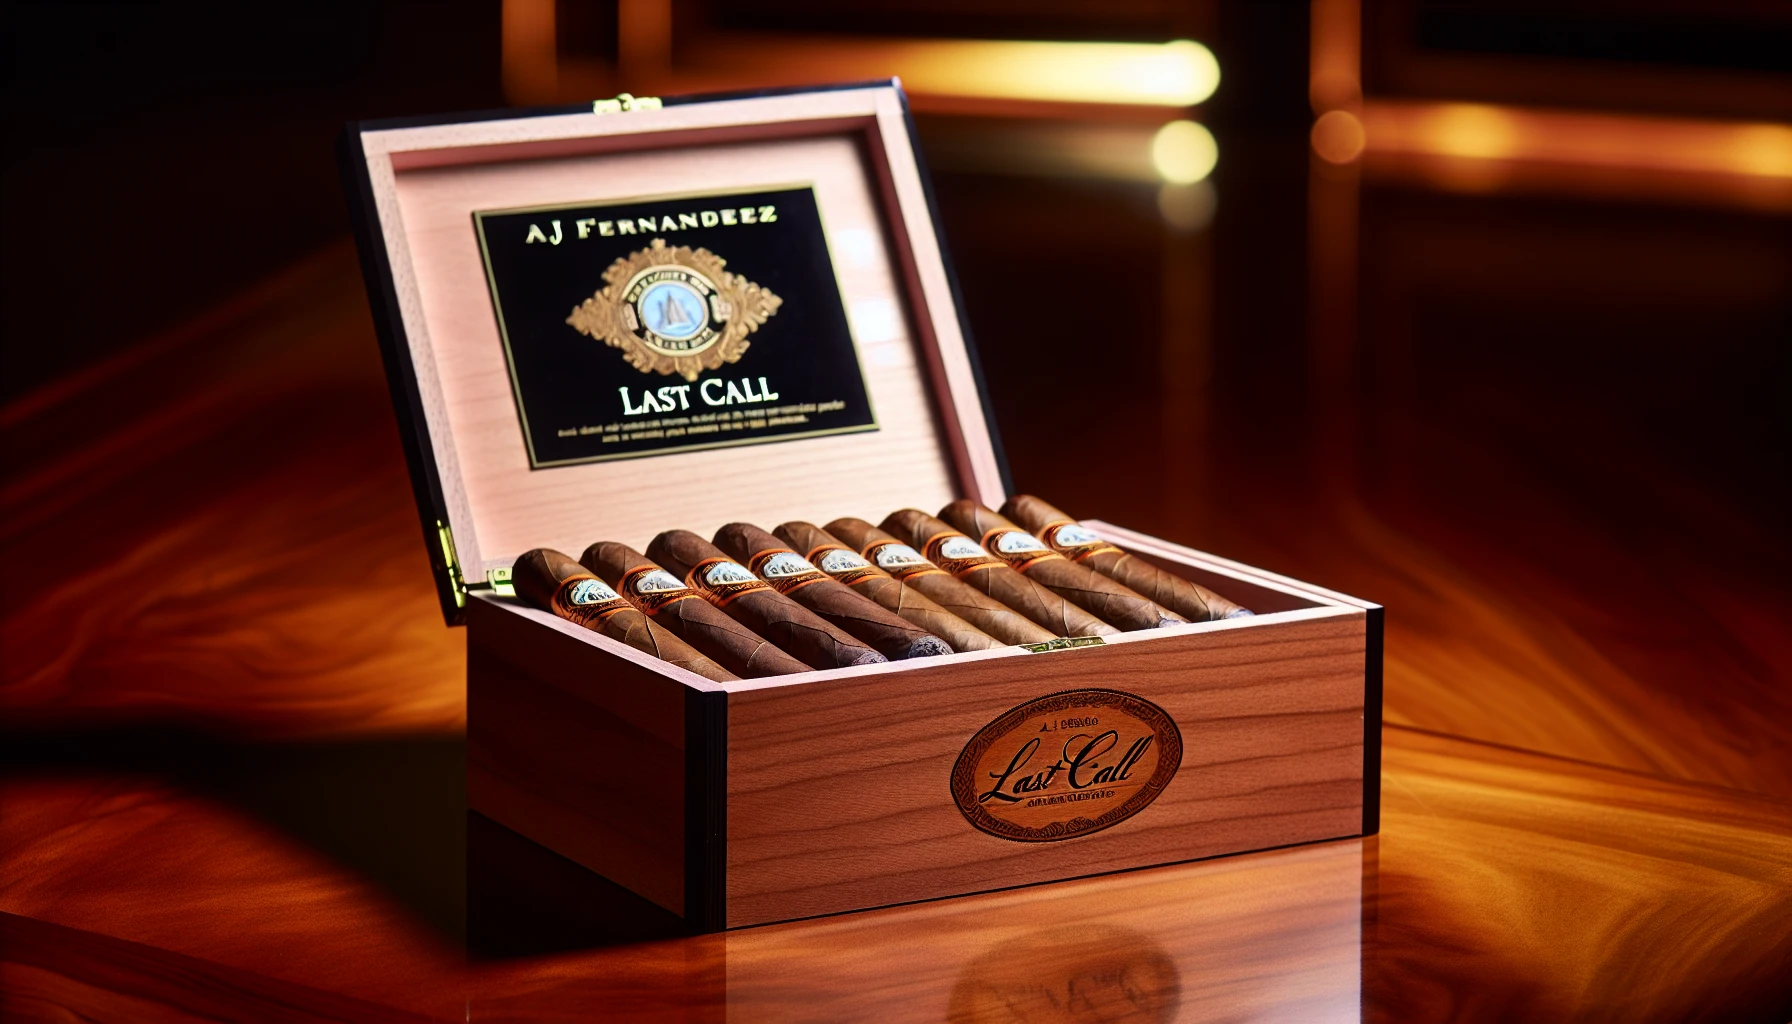 A box of AJ Fernandez Last Call cigars resting on a cedar table